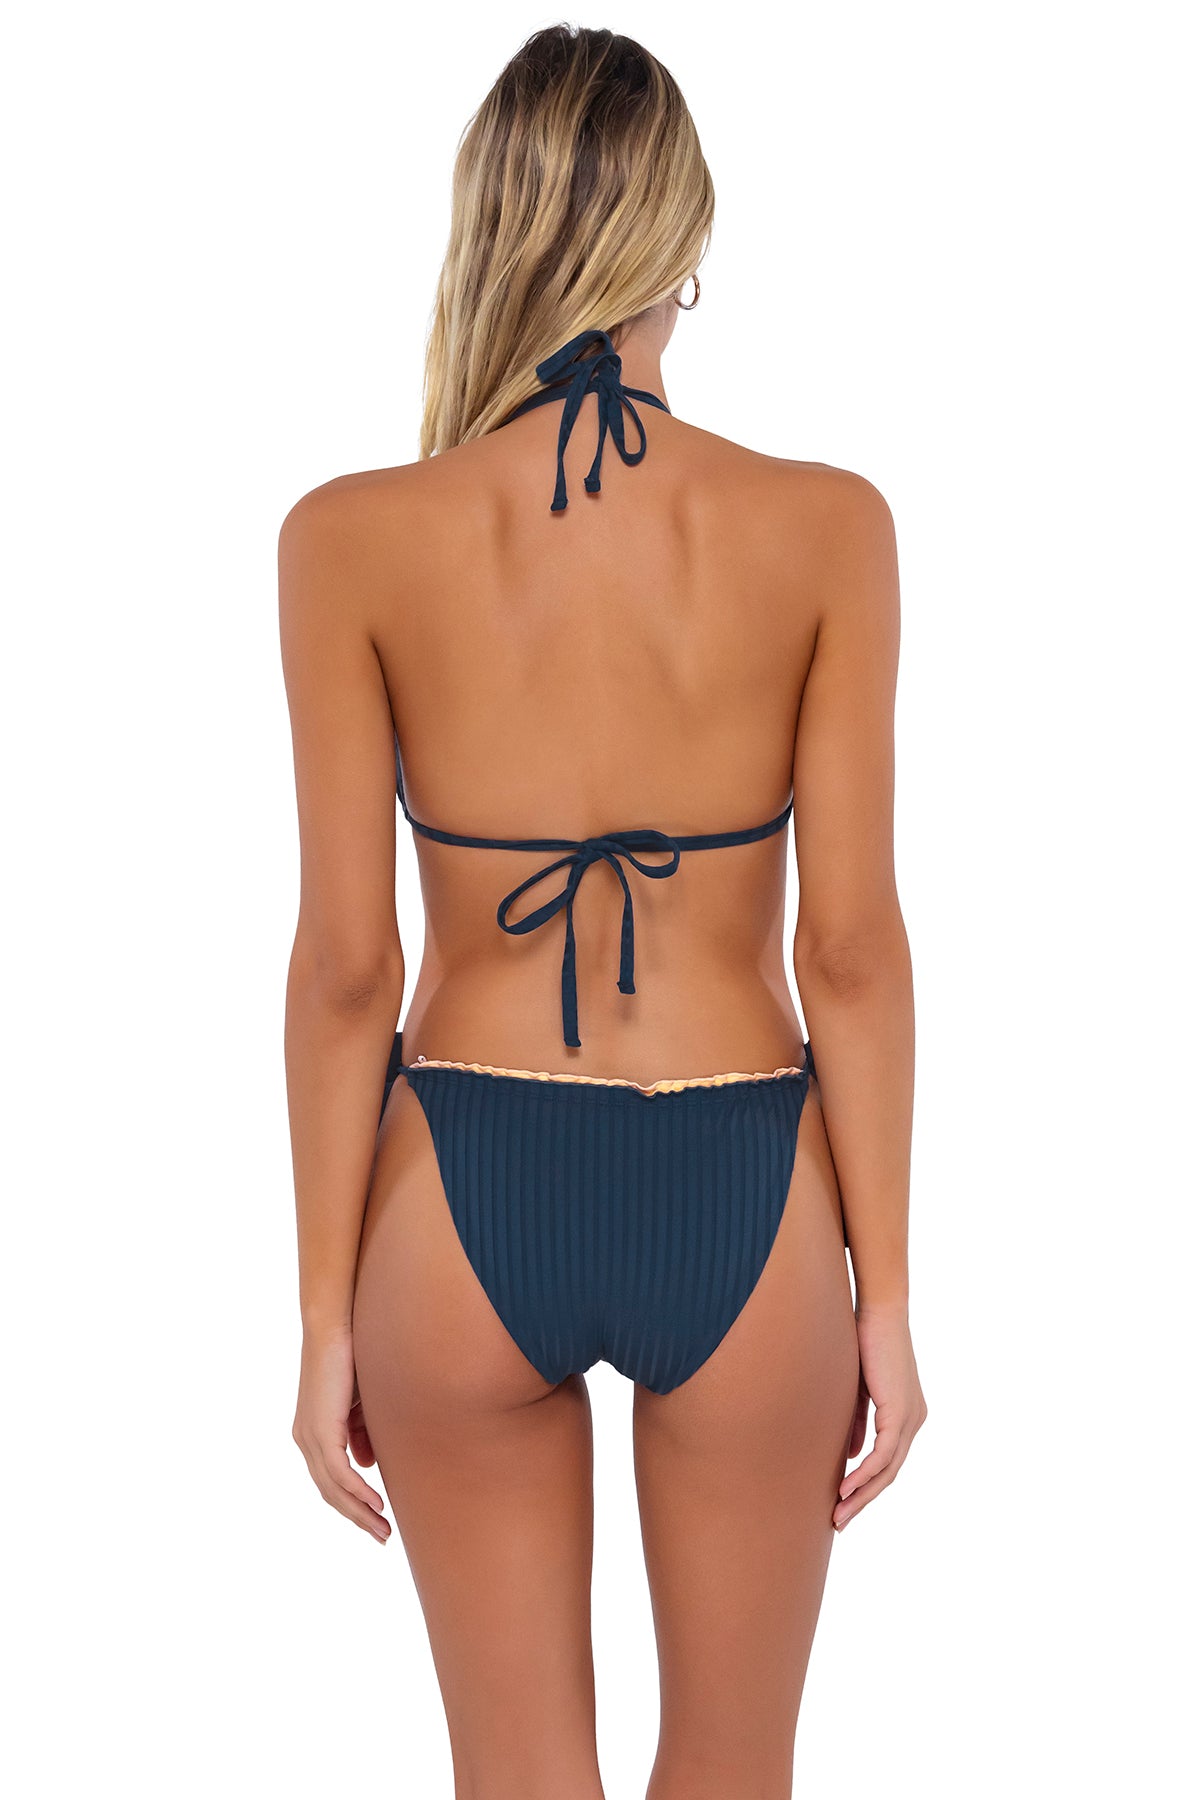 Back pose #1 of Jessica wearing Swim Systems Night Sky Bay Rib Monica Tie Side Bottom with matching Cambria Triangle bikini top